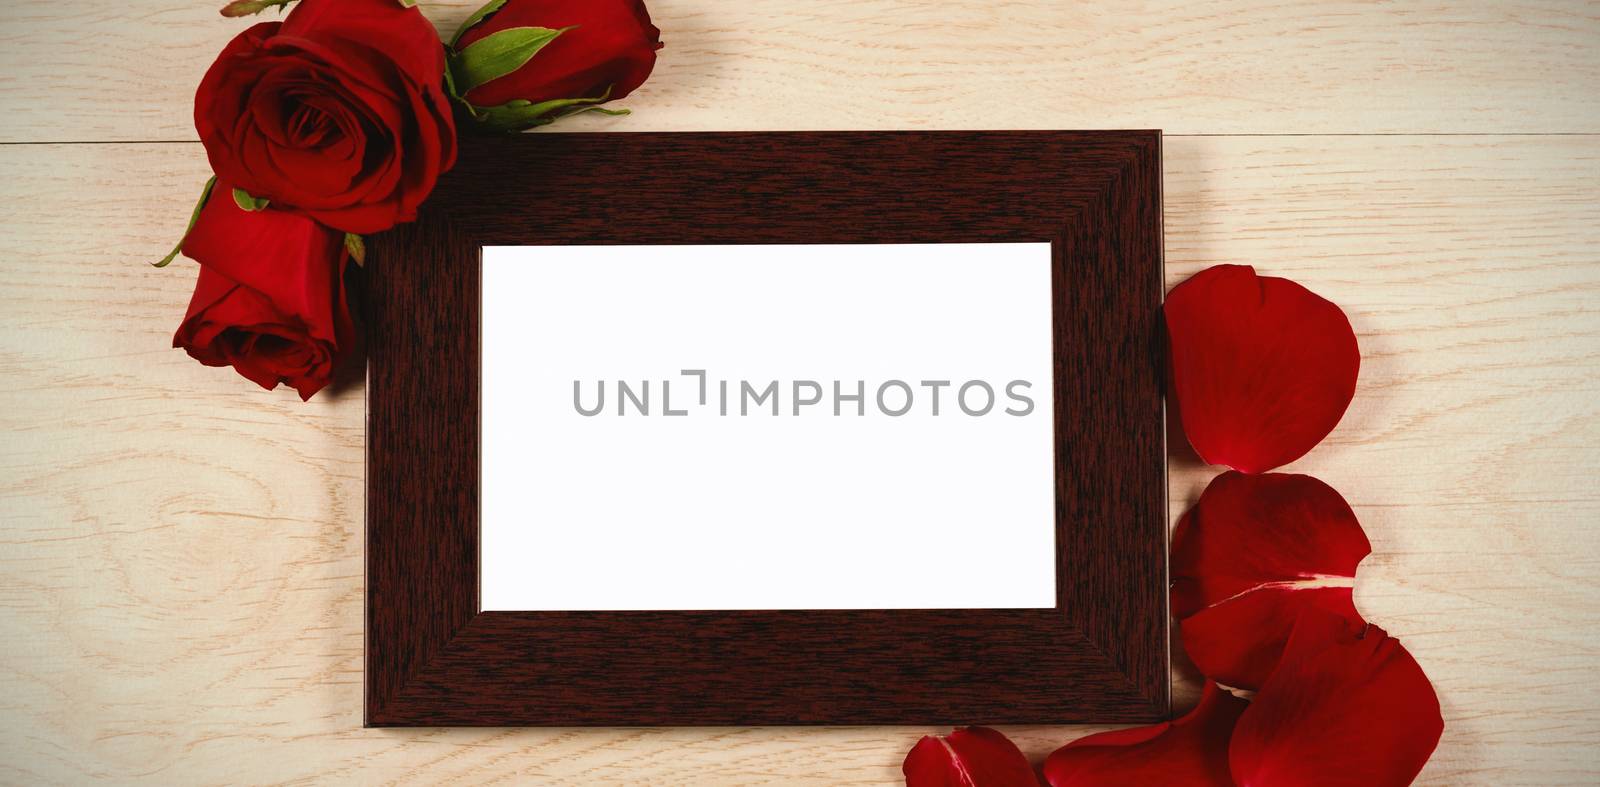 Photo frame and rose flower by Wavebreakmedia